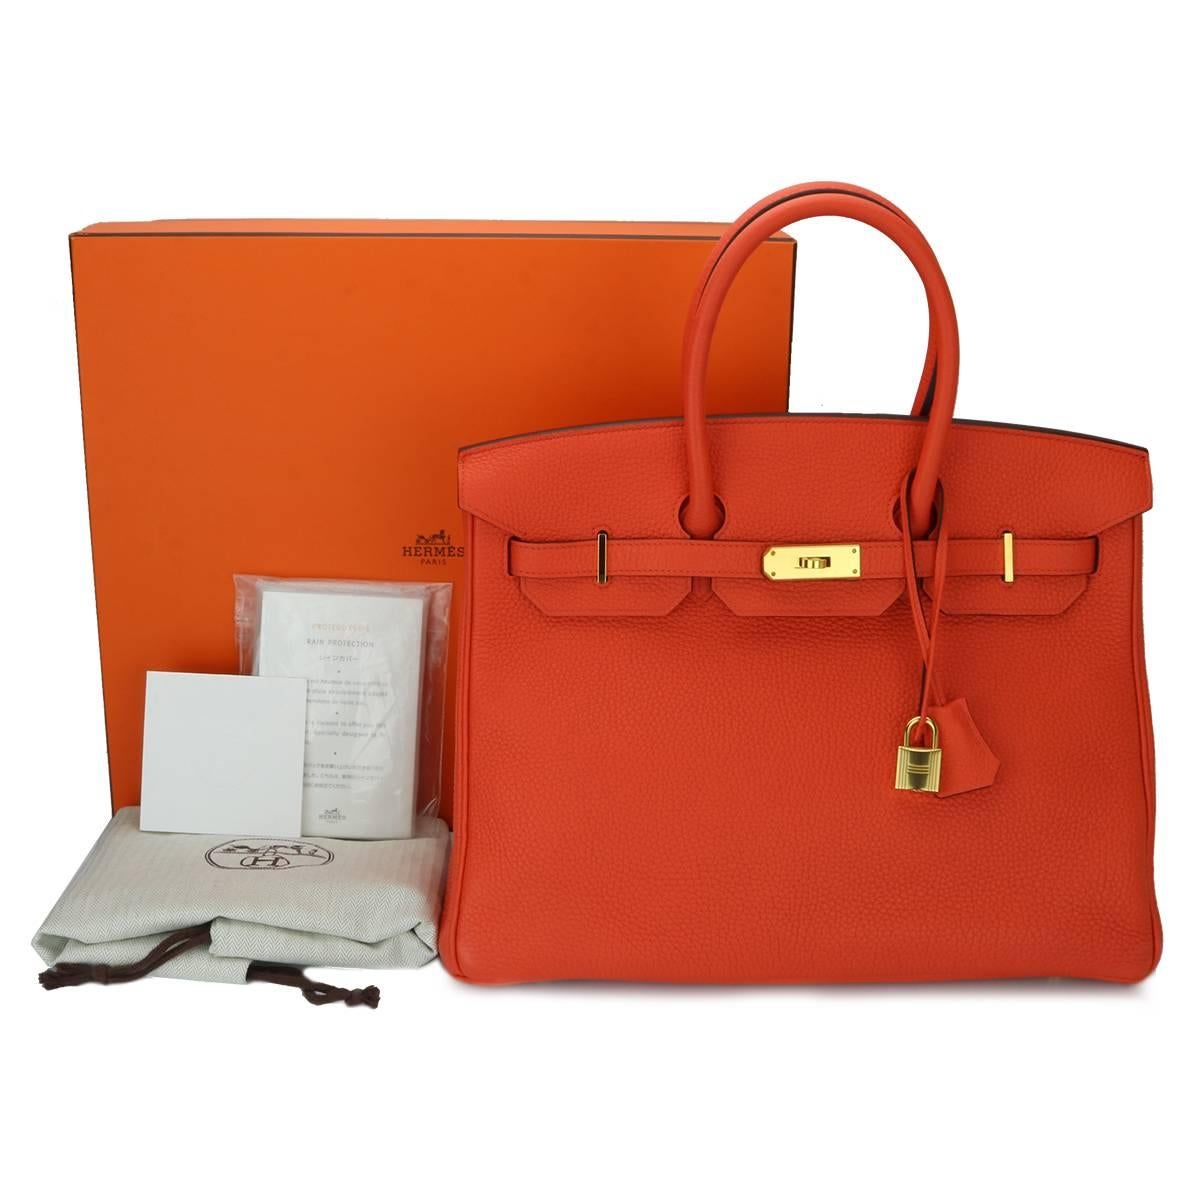 Hermès 35cm Orange Togo Leather with Gold Hardware Stamp T Year 2015 Birkin Bag 13